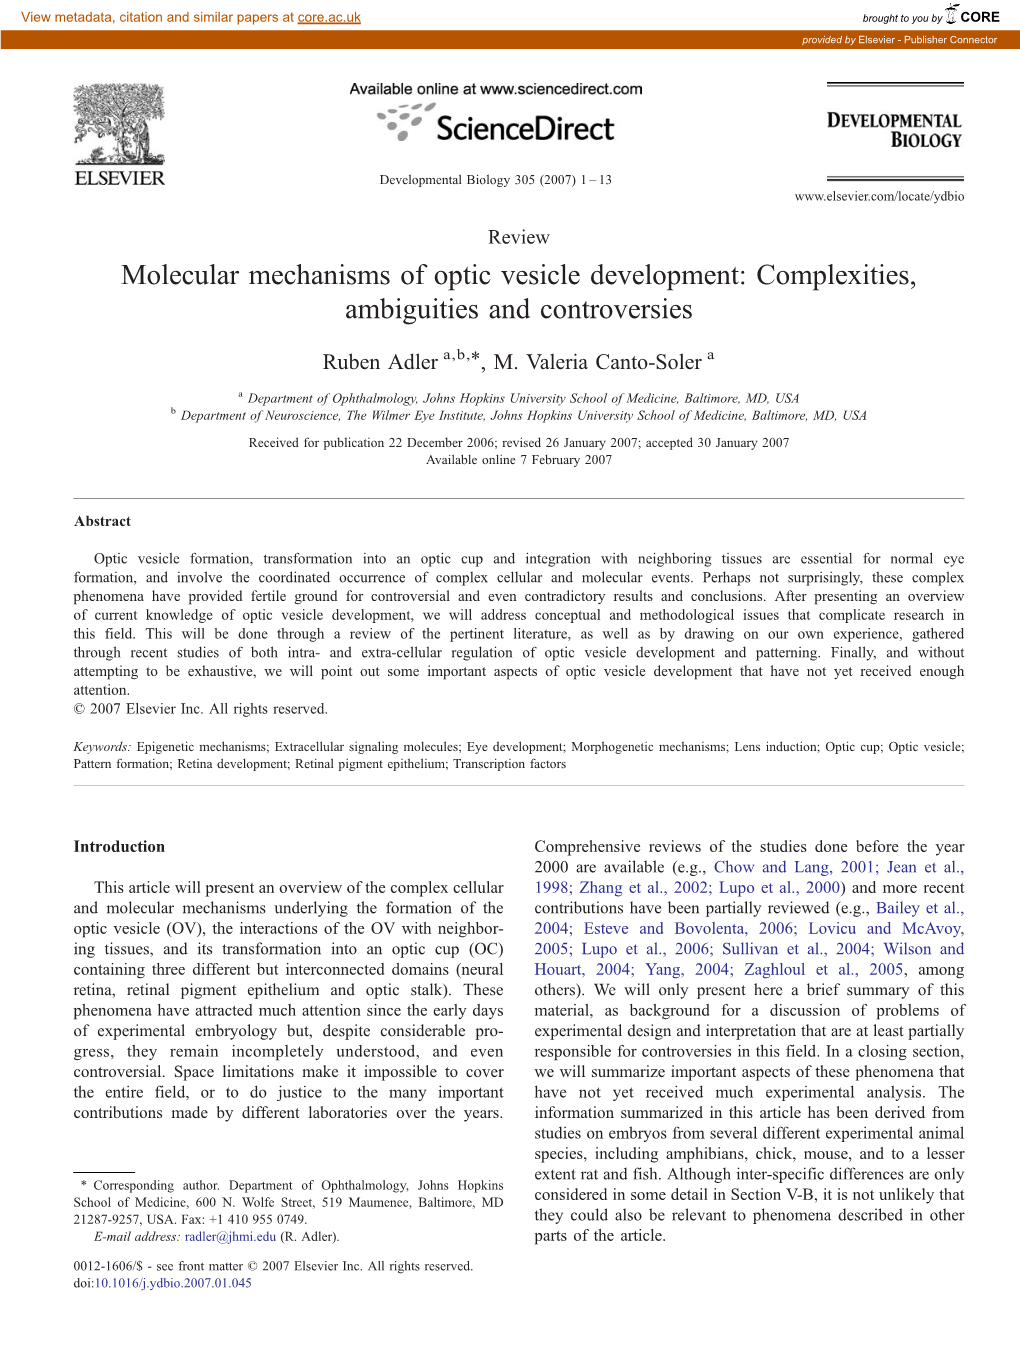 Molecular Mechanisms of Optic Vesicle Development: Complexities, Ambiguities and Controversies ⁎ Ruben Adler A,B, , M